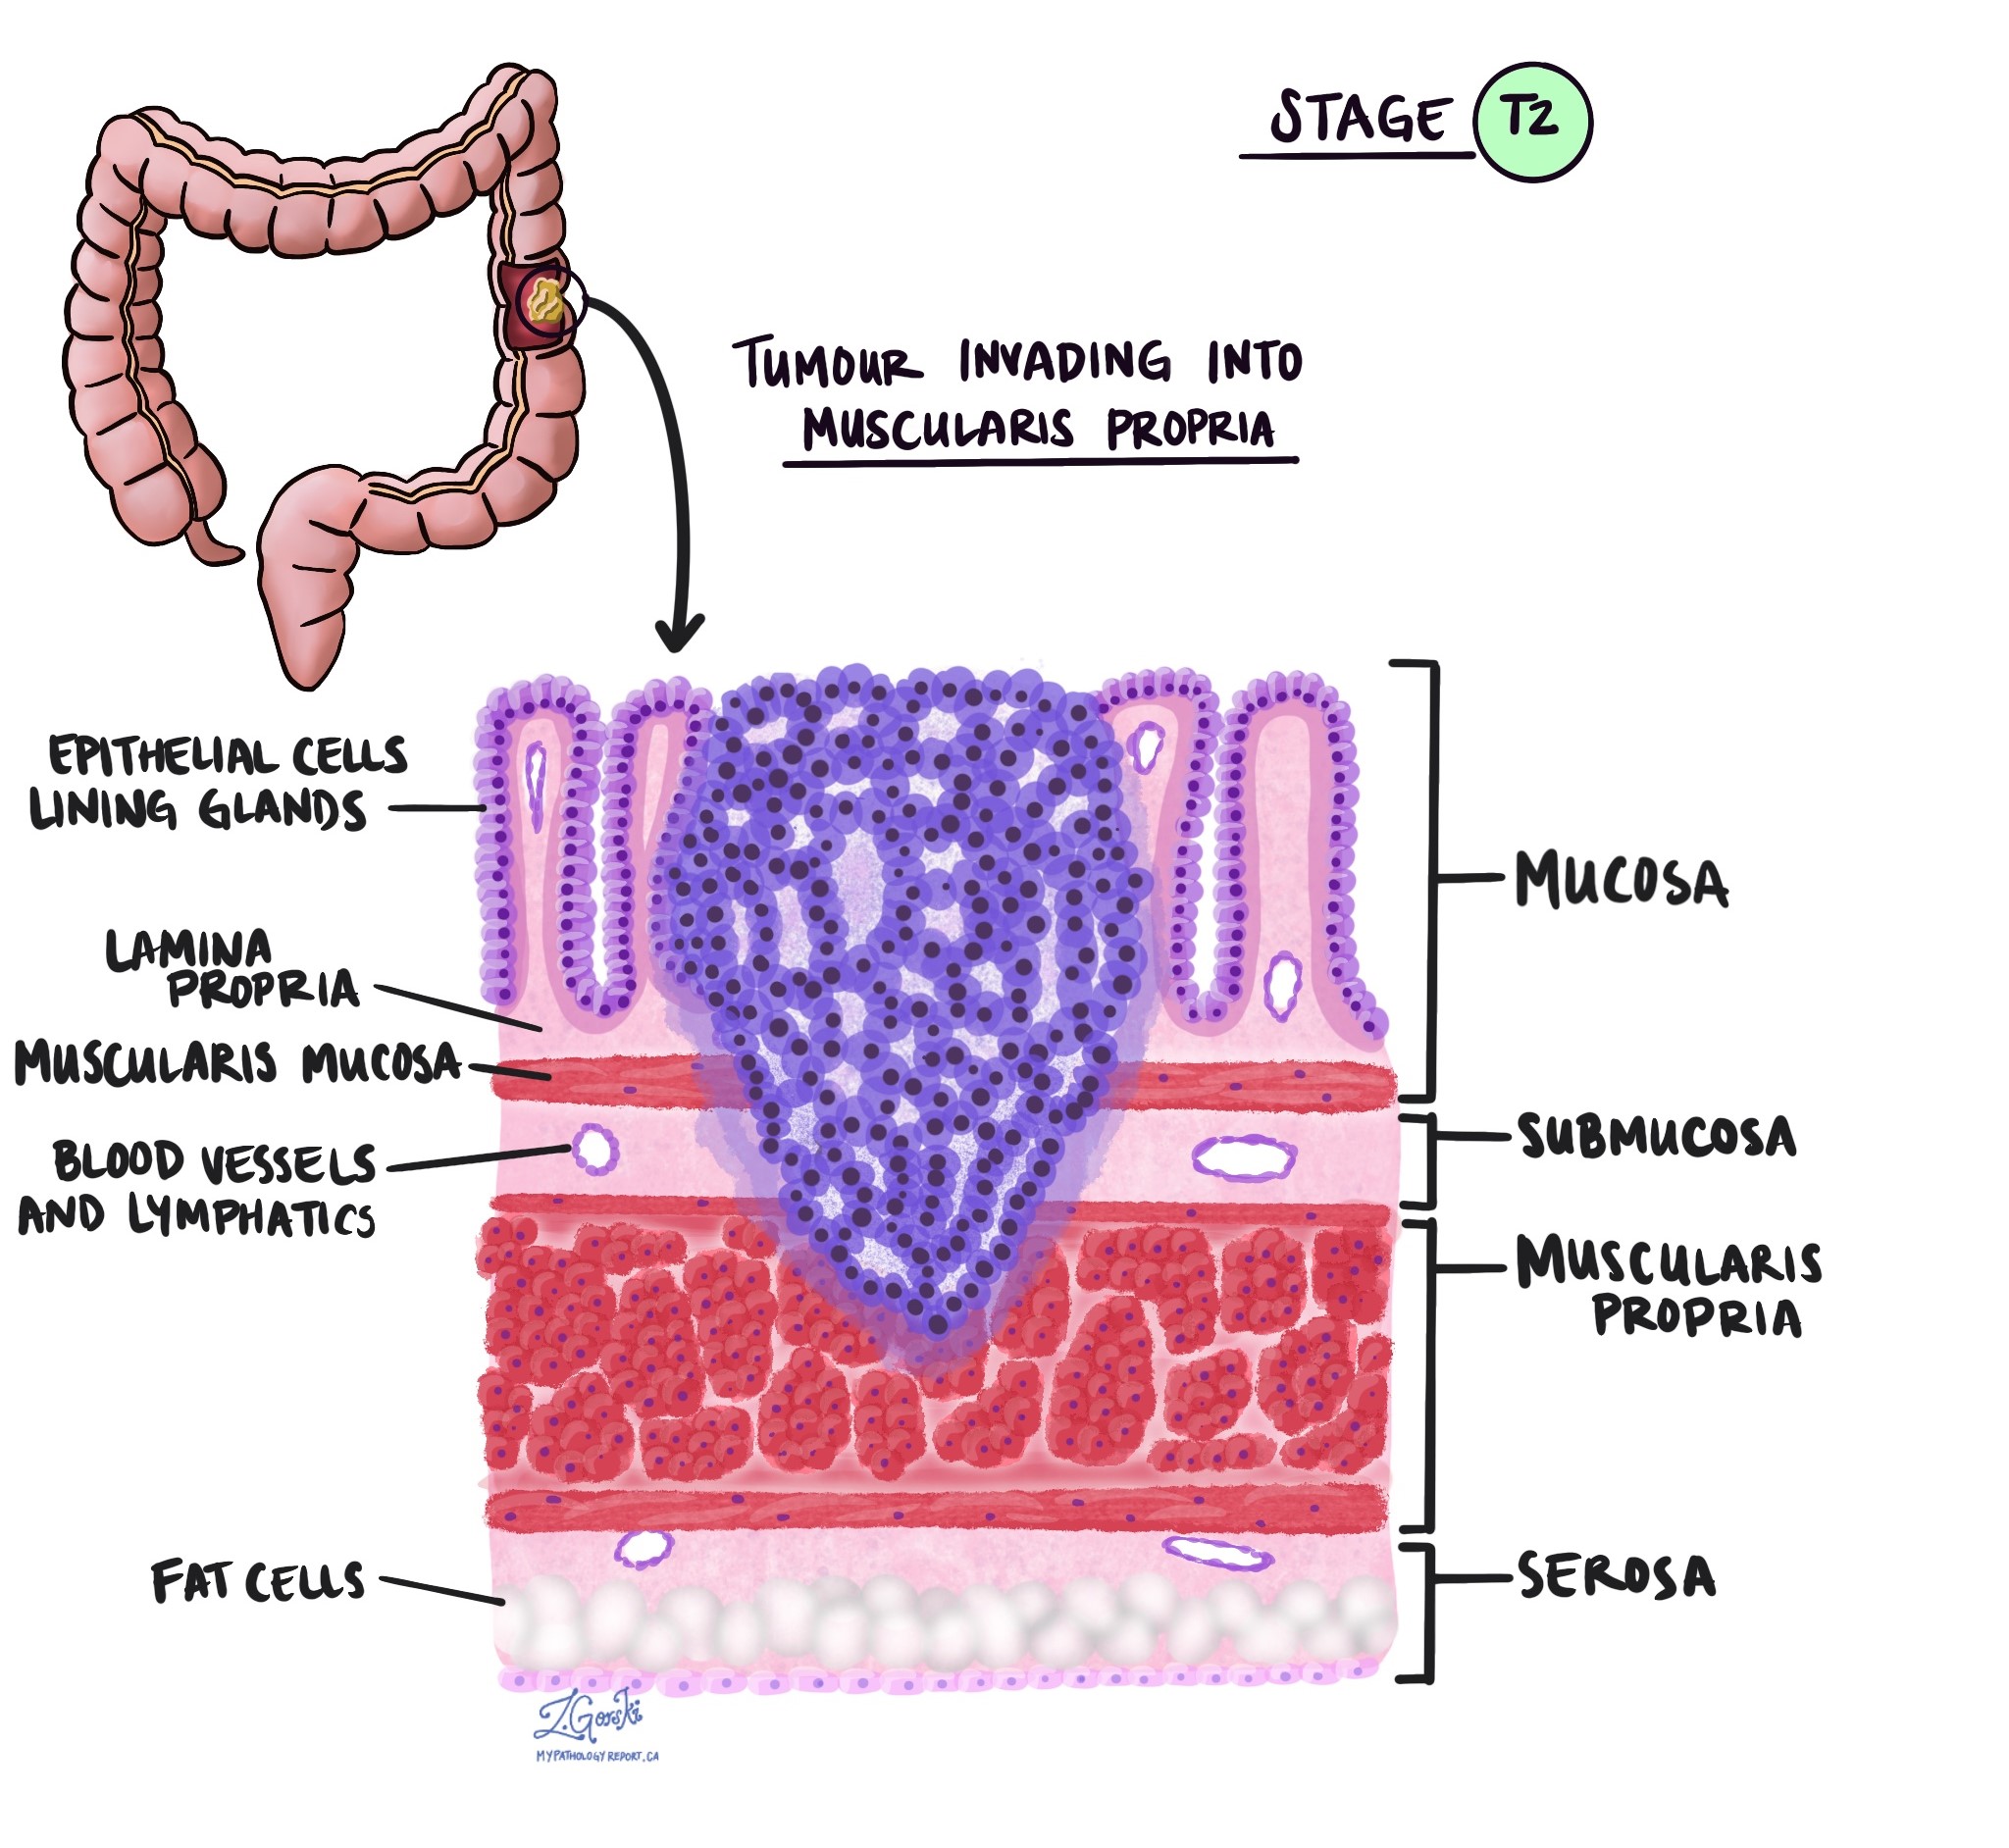 Adenocarcinoma of the colon pathologic tumour stage T2